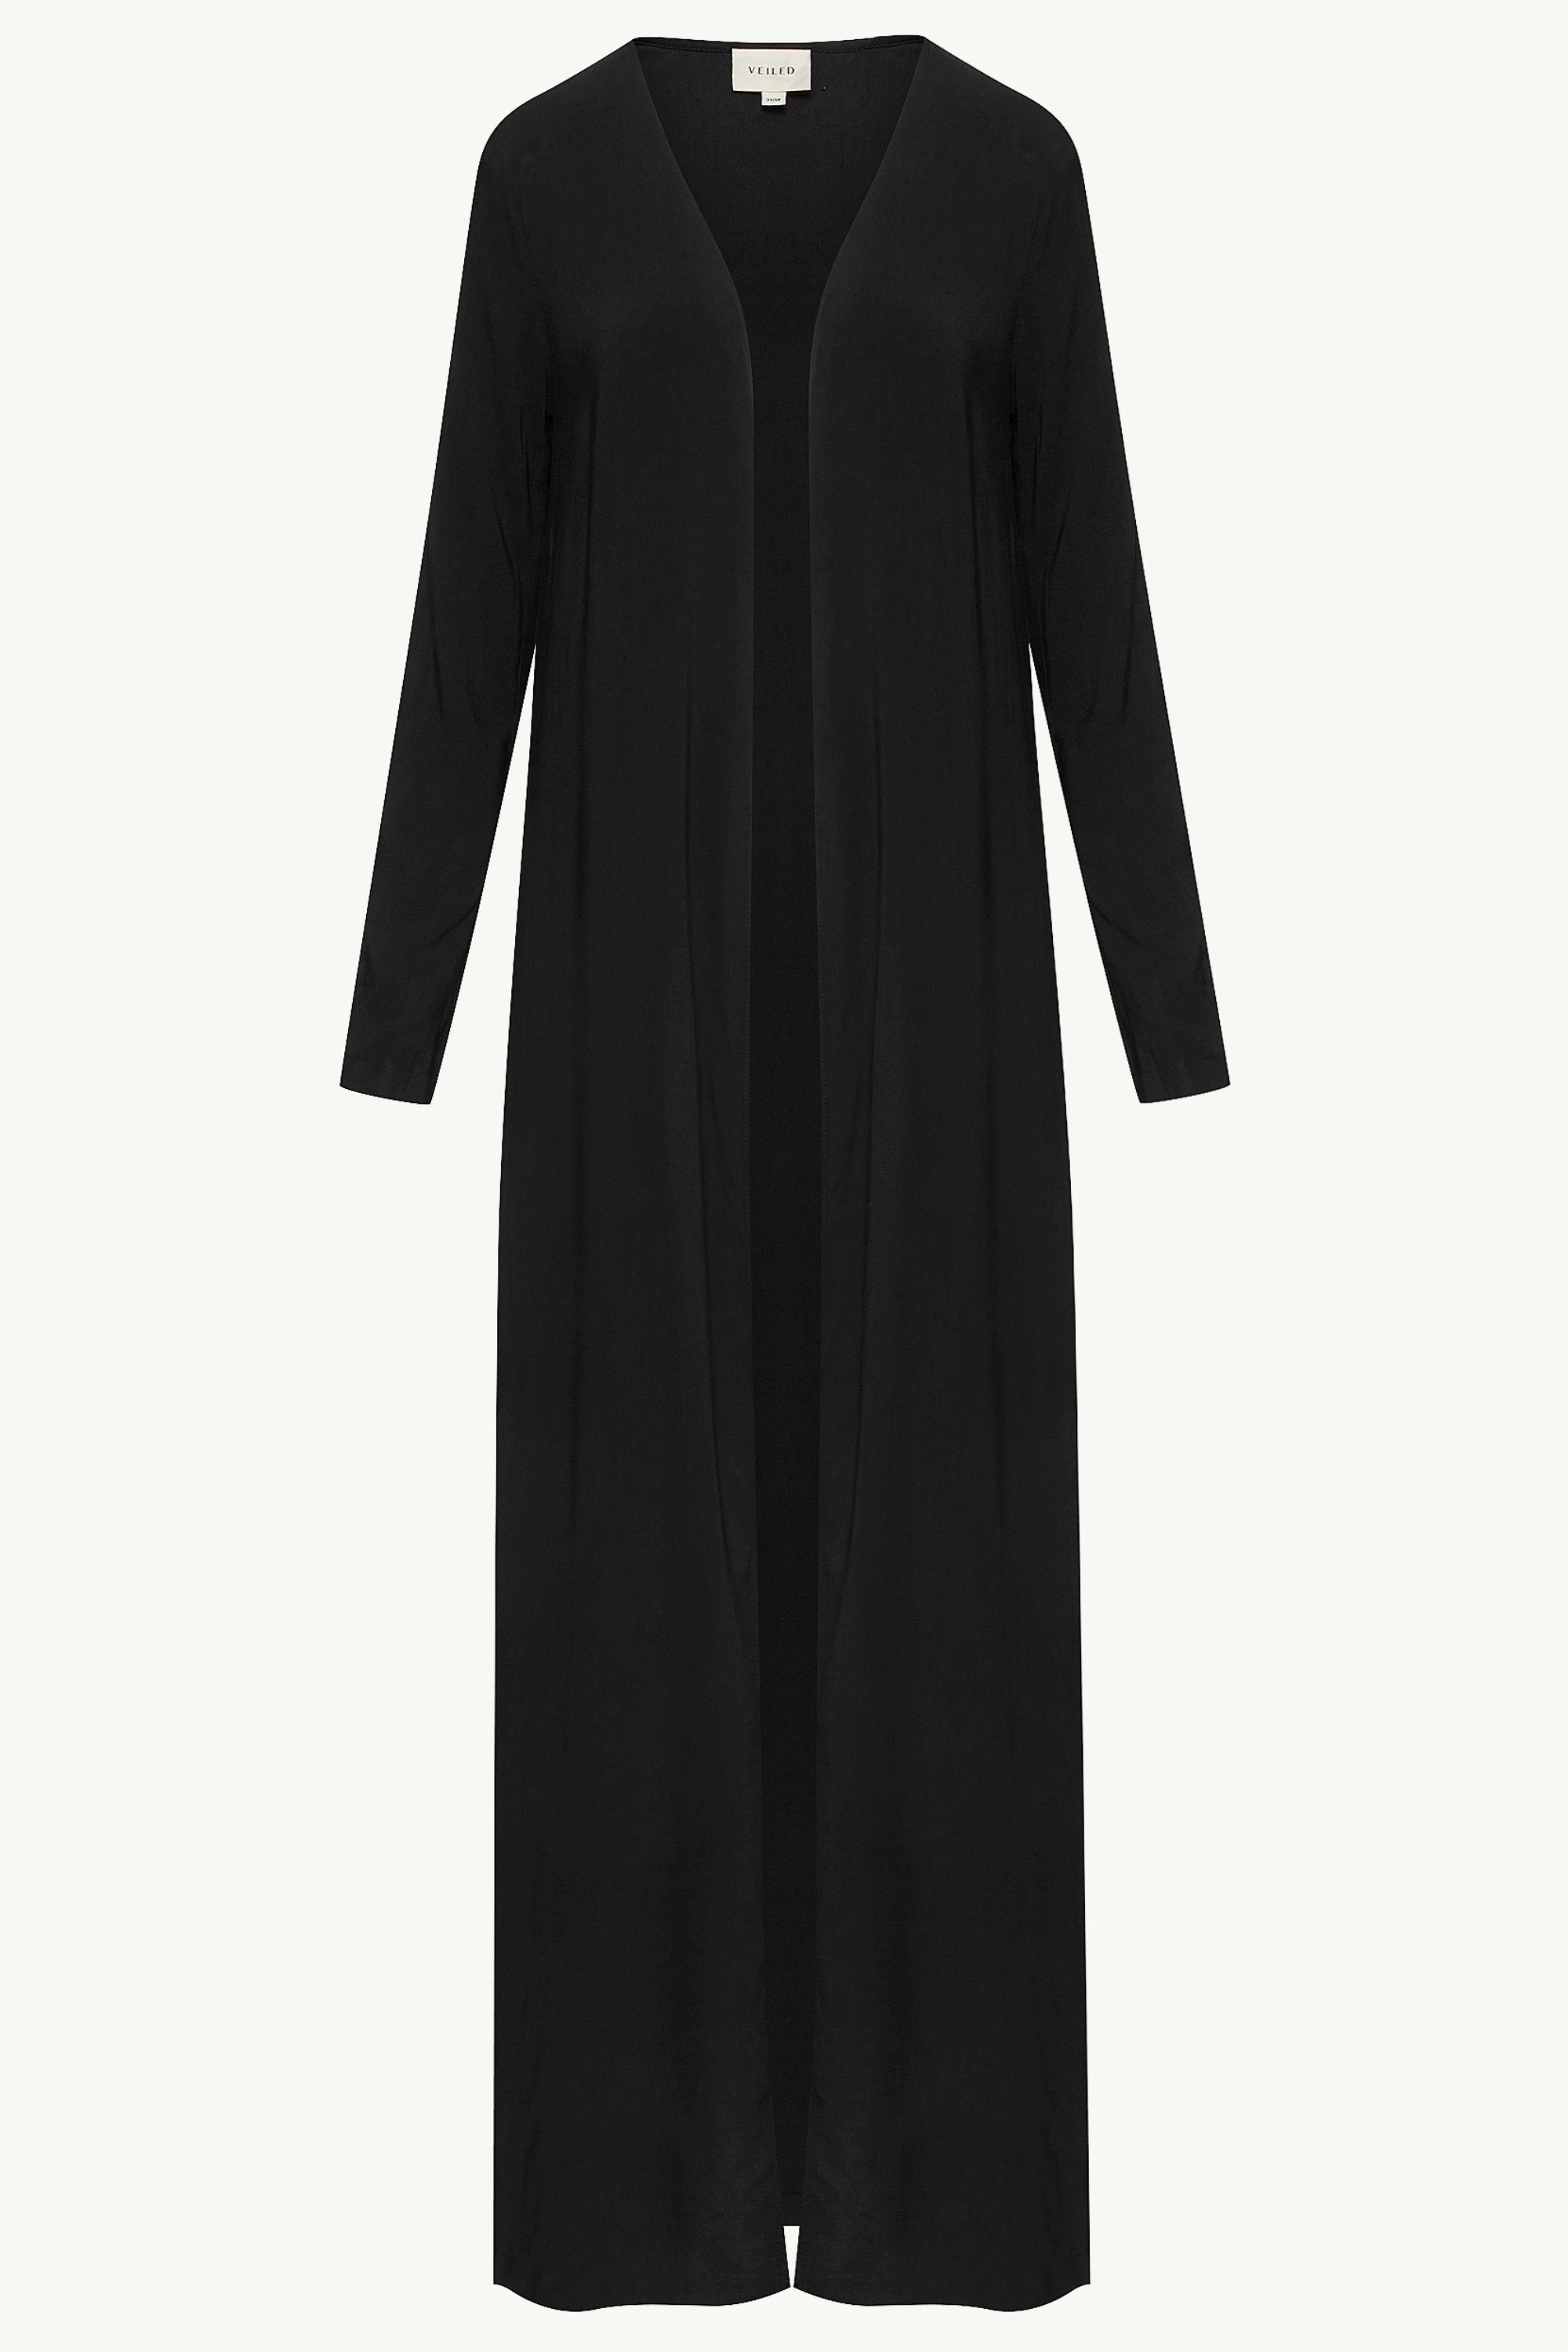 Essential Woven Open Abaya - Black Clothing epschoolboard 